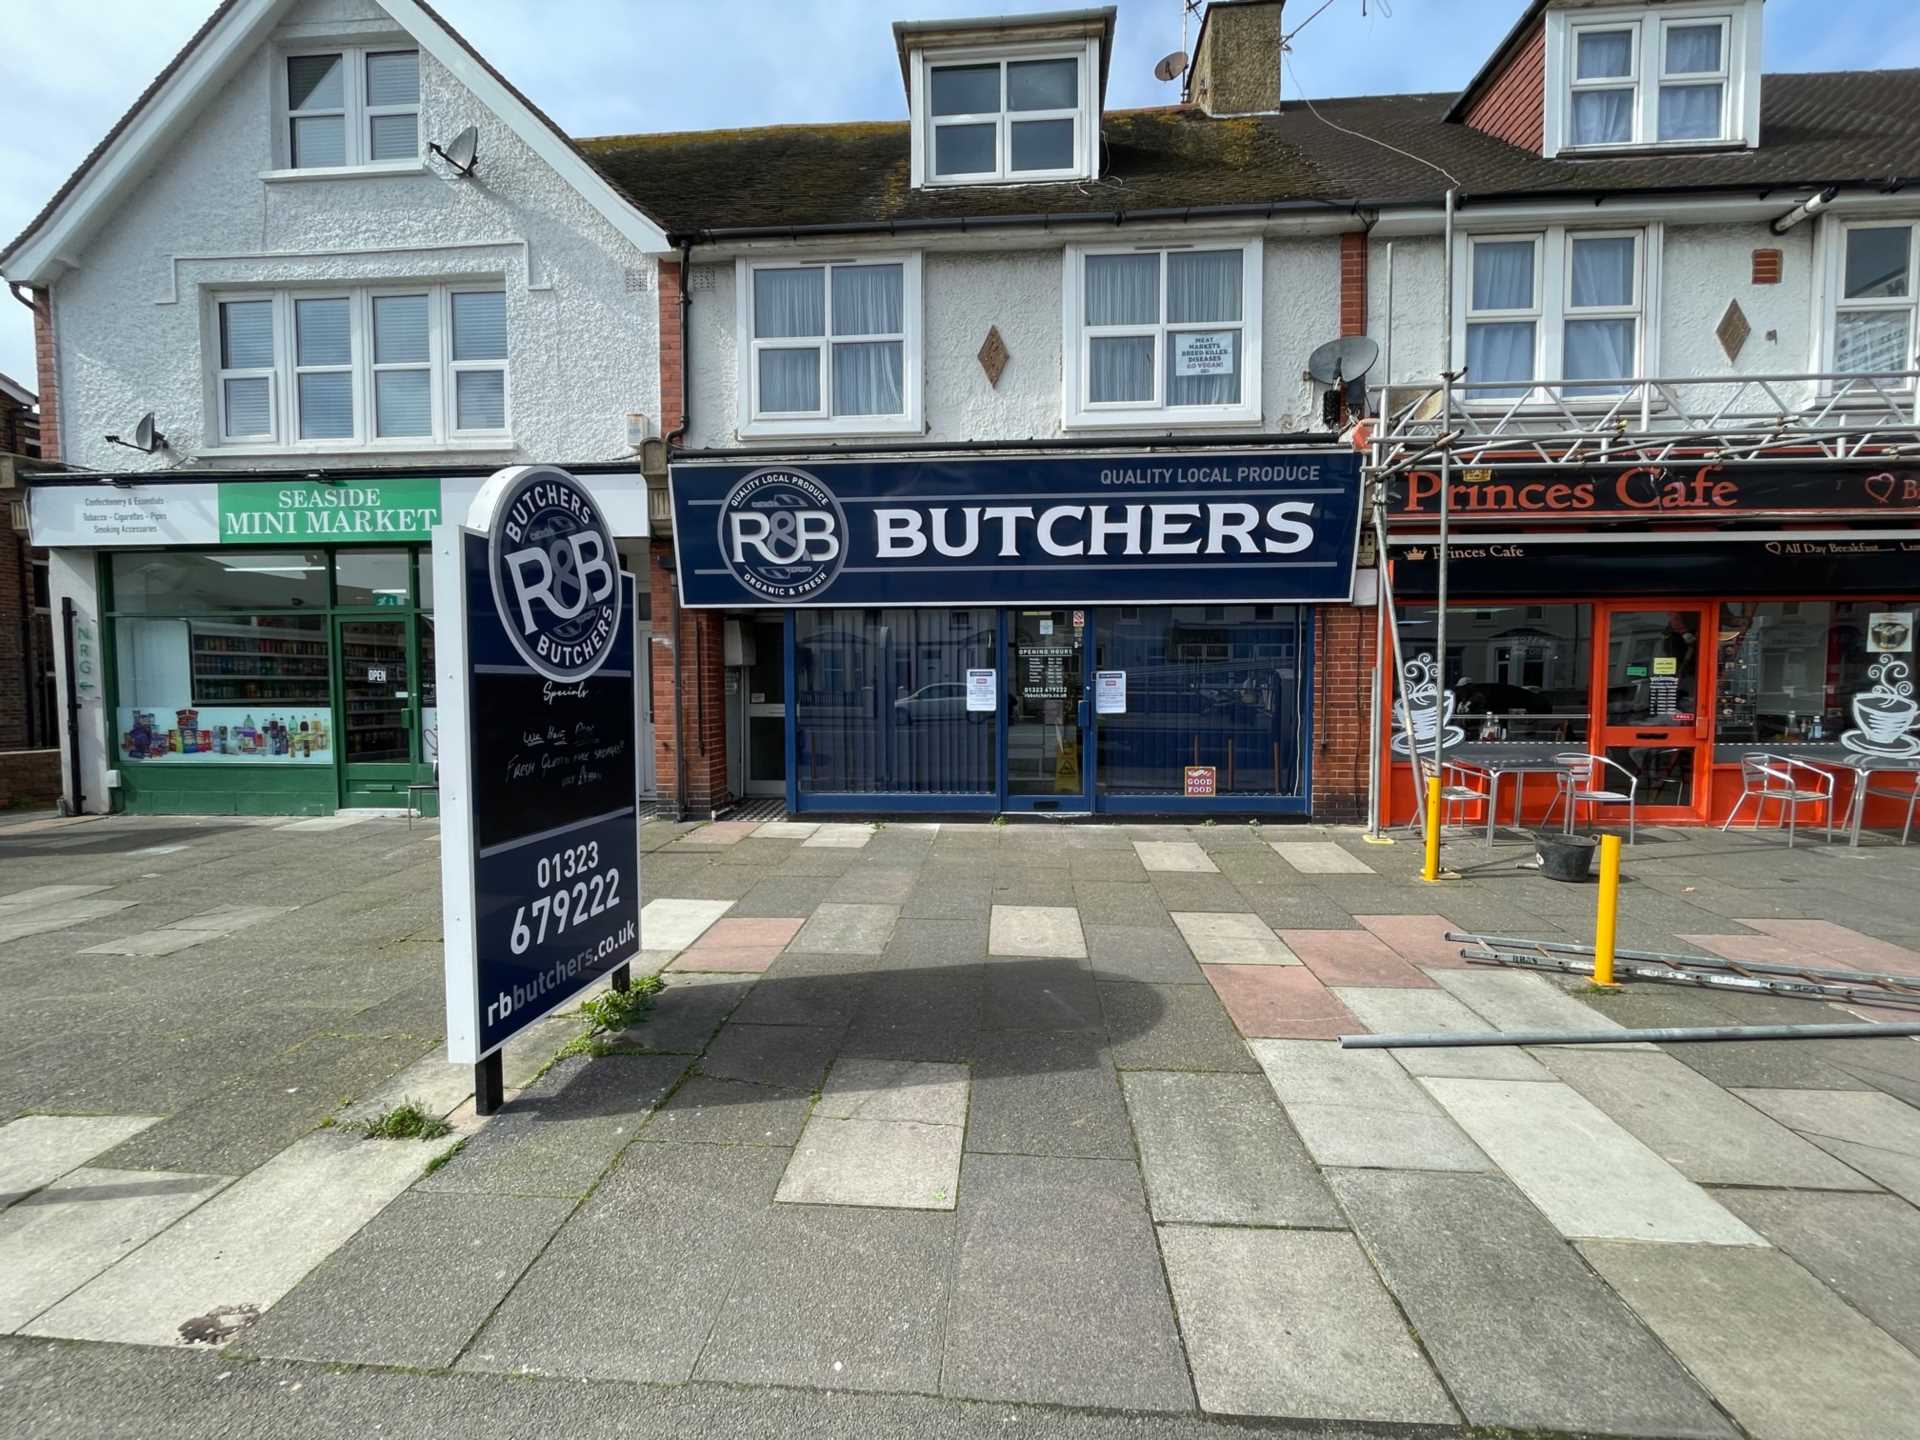 Seaside (R&B Butchers), Seaside, Eastbourne